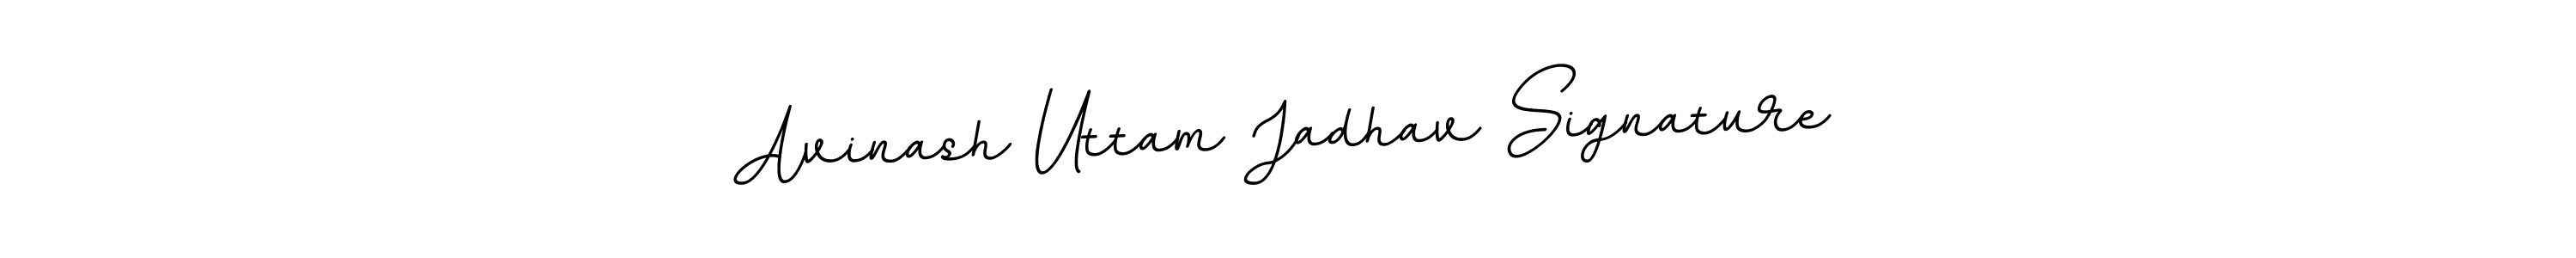 Make a beautiful signature design for name Avinash Uttam Jadhav Signature. Use this online signature maker to create a handwritten signature for free. Avinash Uttam Jadhav Signature signature style 11 images and pictures png